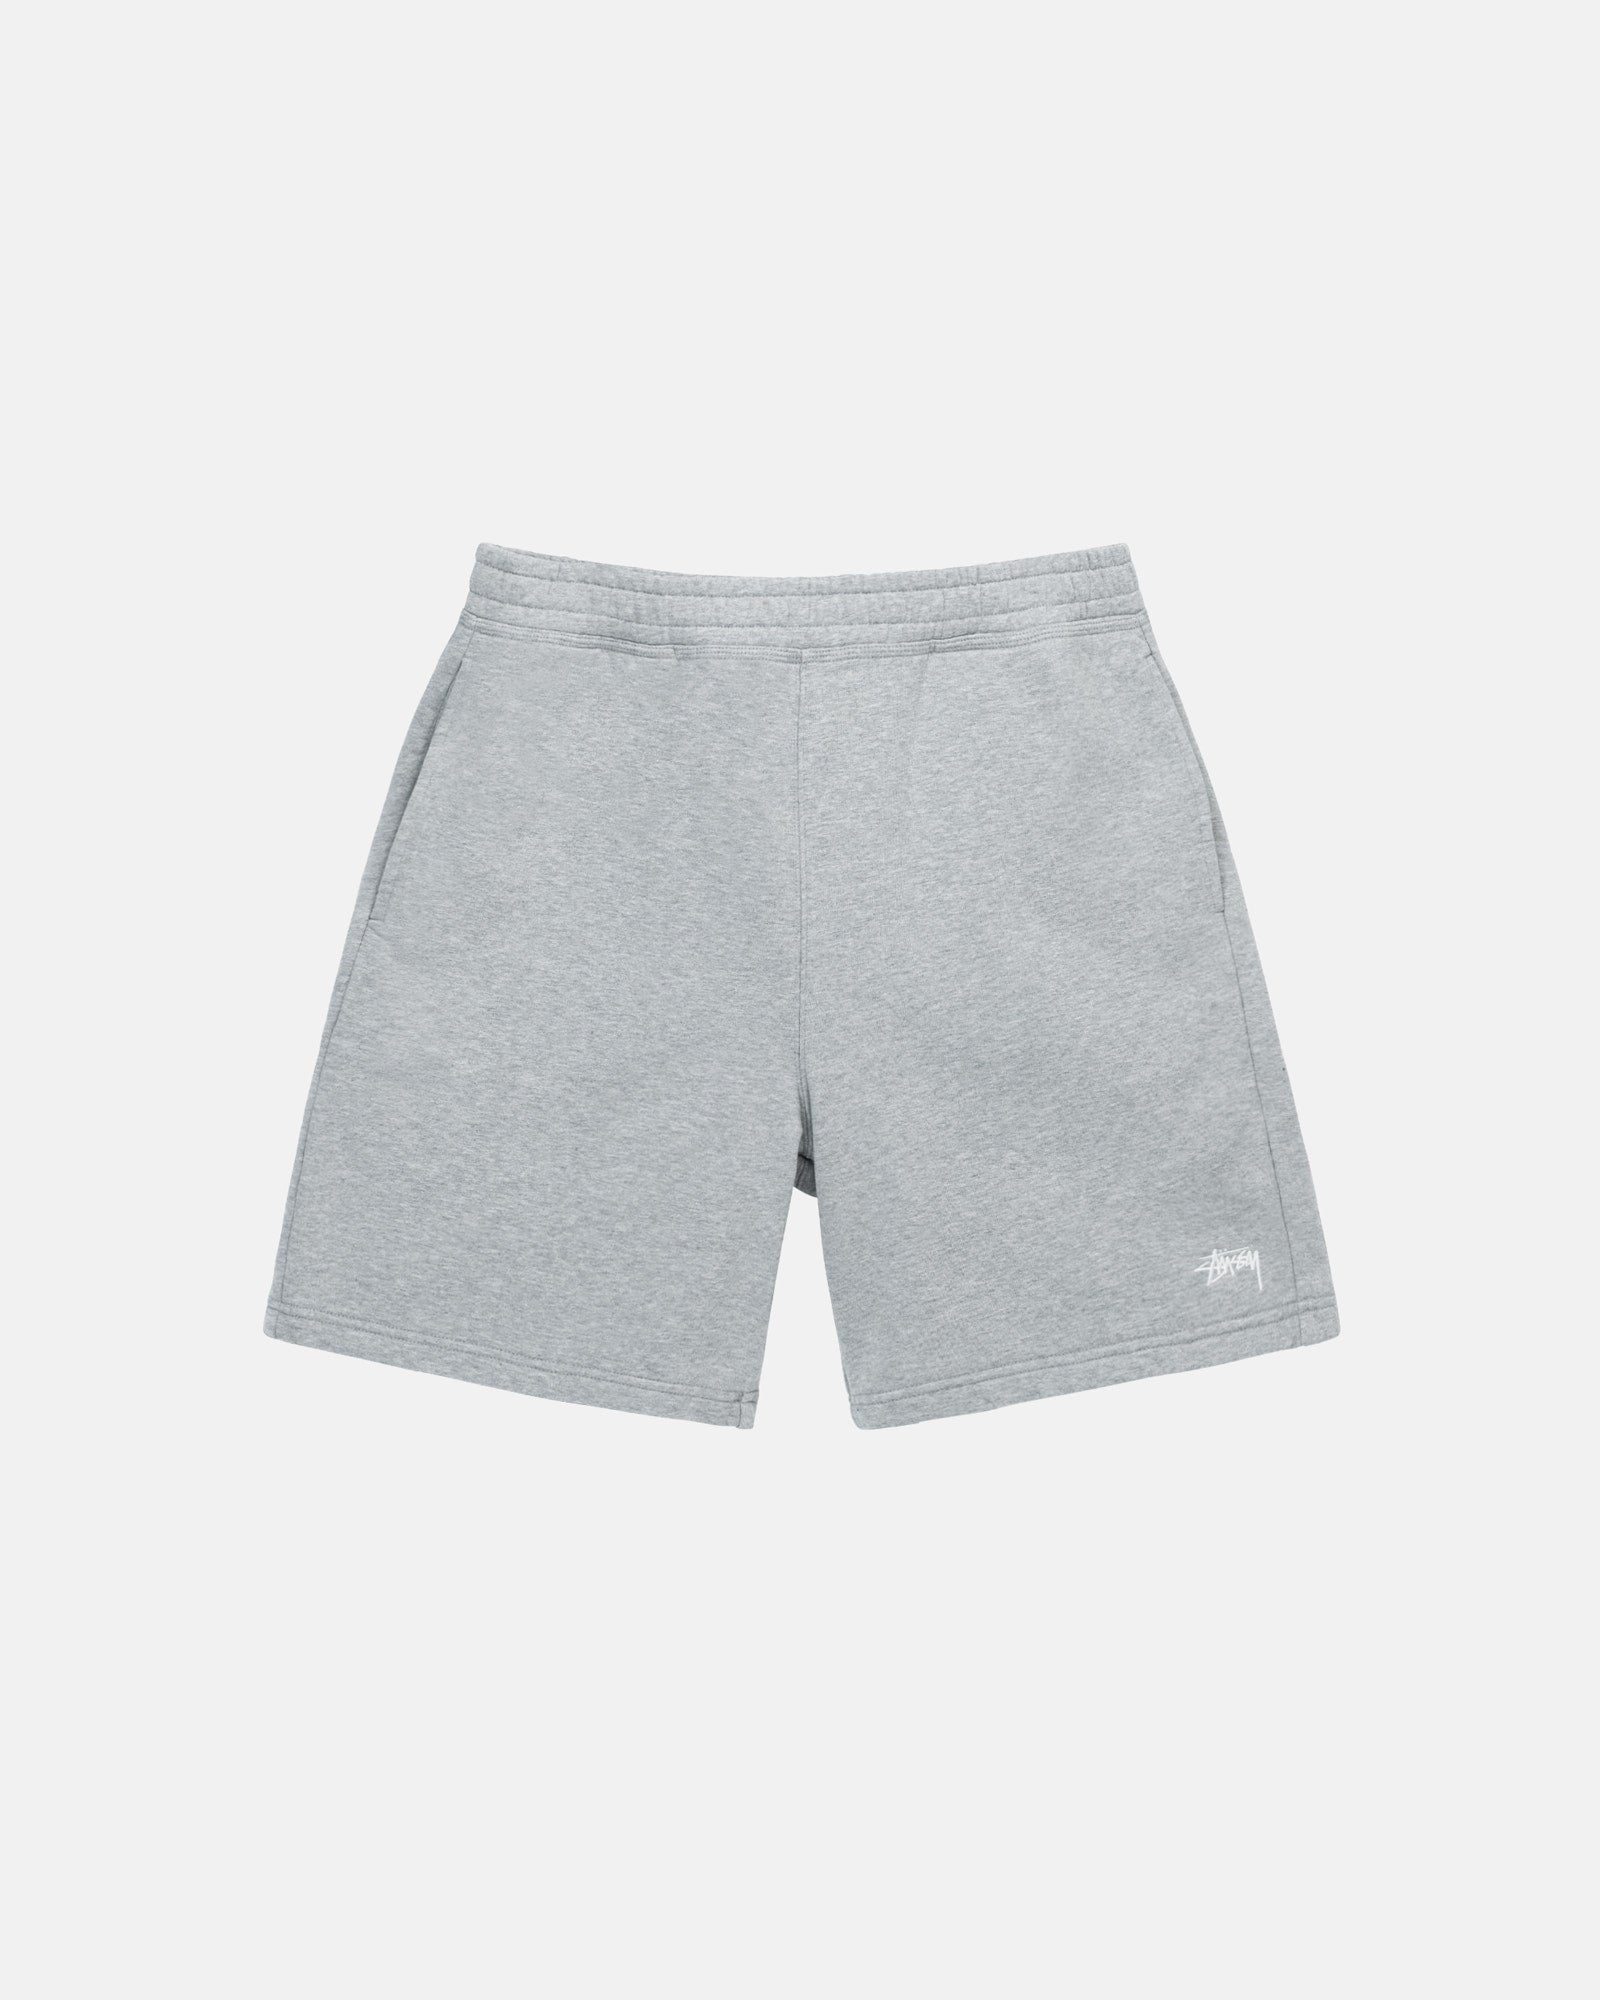 Shorts, Trunks & Water Shorts | Stüssy Japan